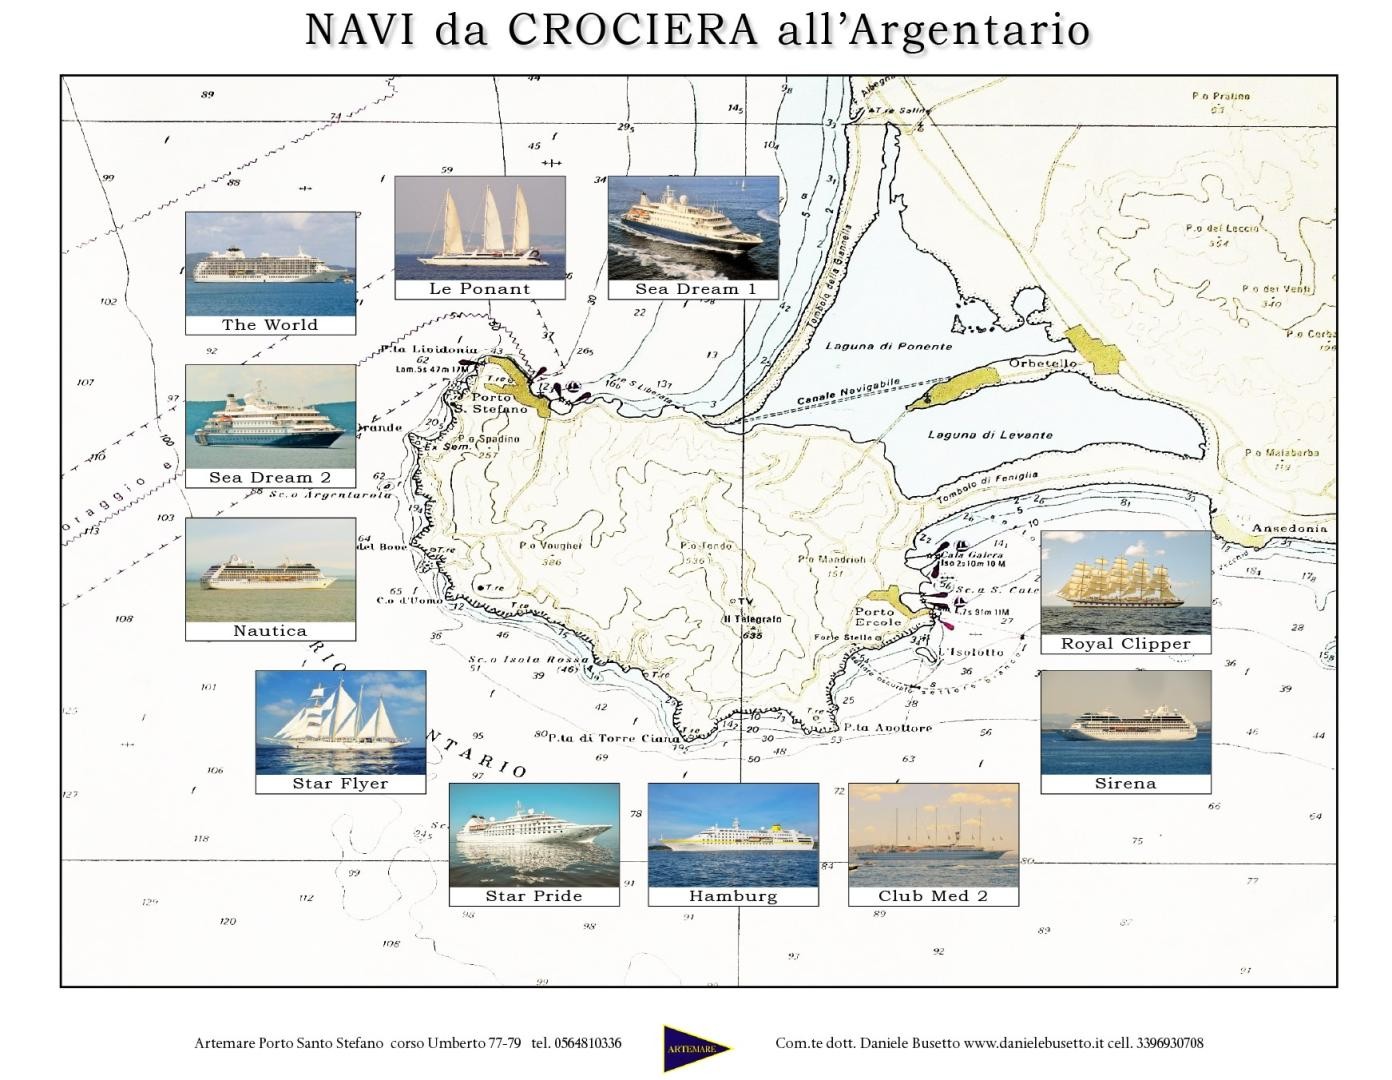 Mappa navi da crociera all'Argentario